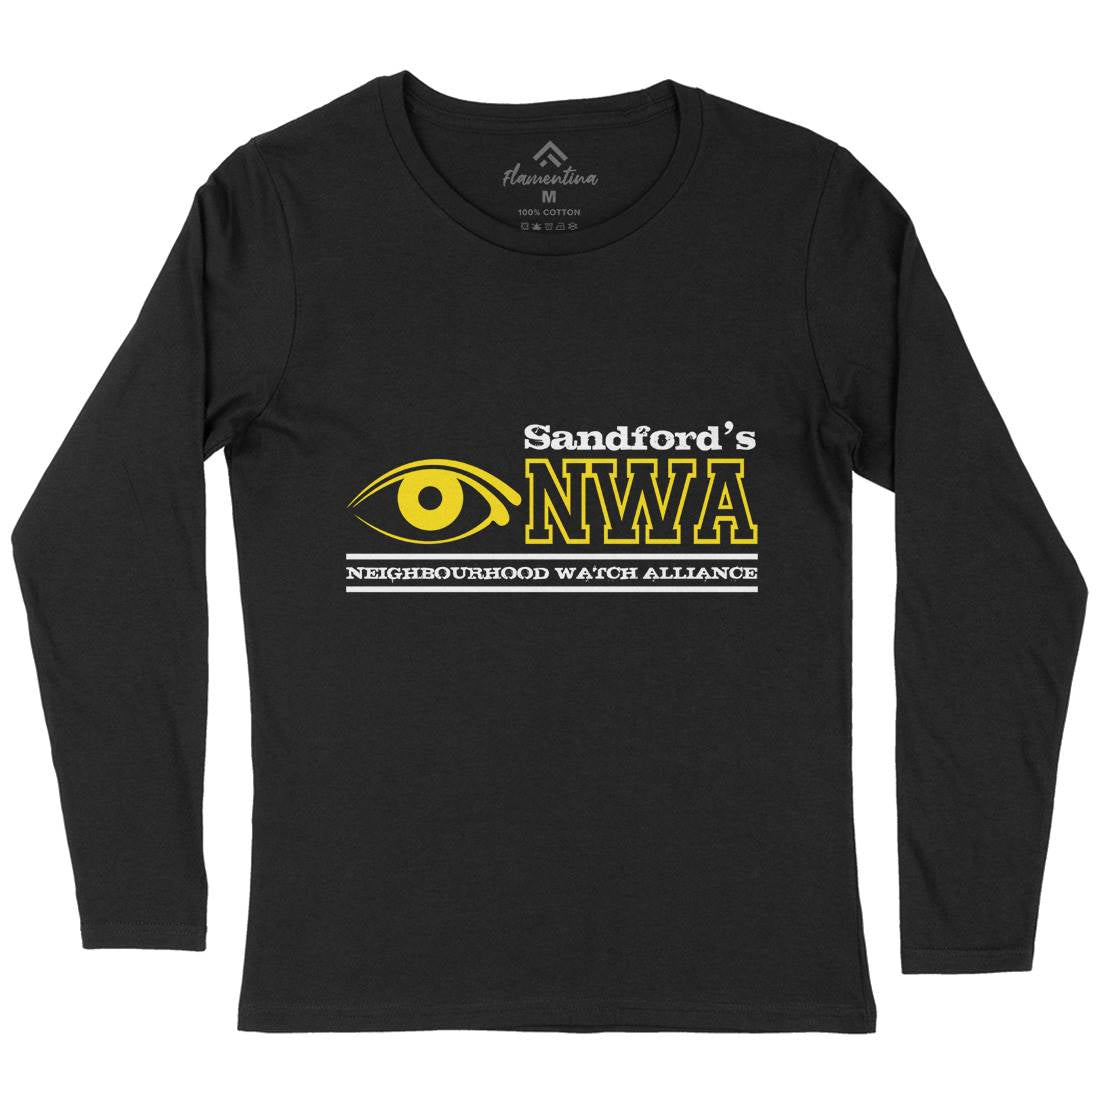 Nwa Womens Long Sleeve T-Shirt Retro D426